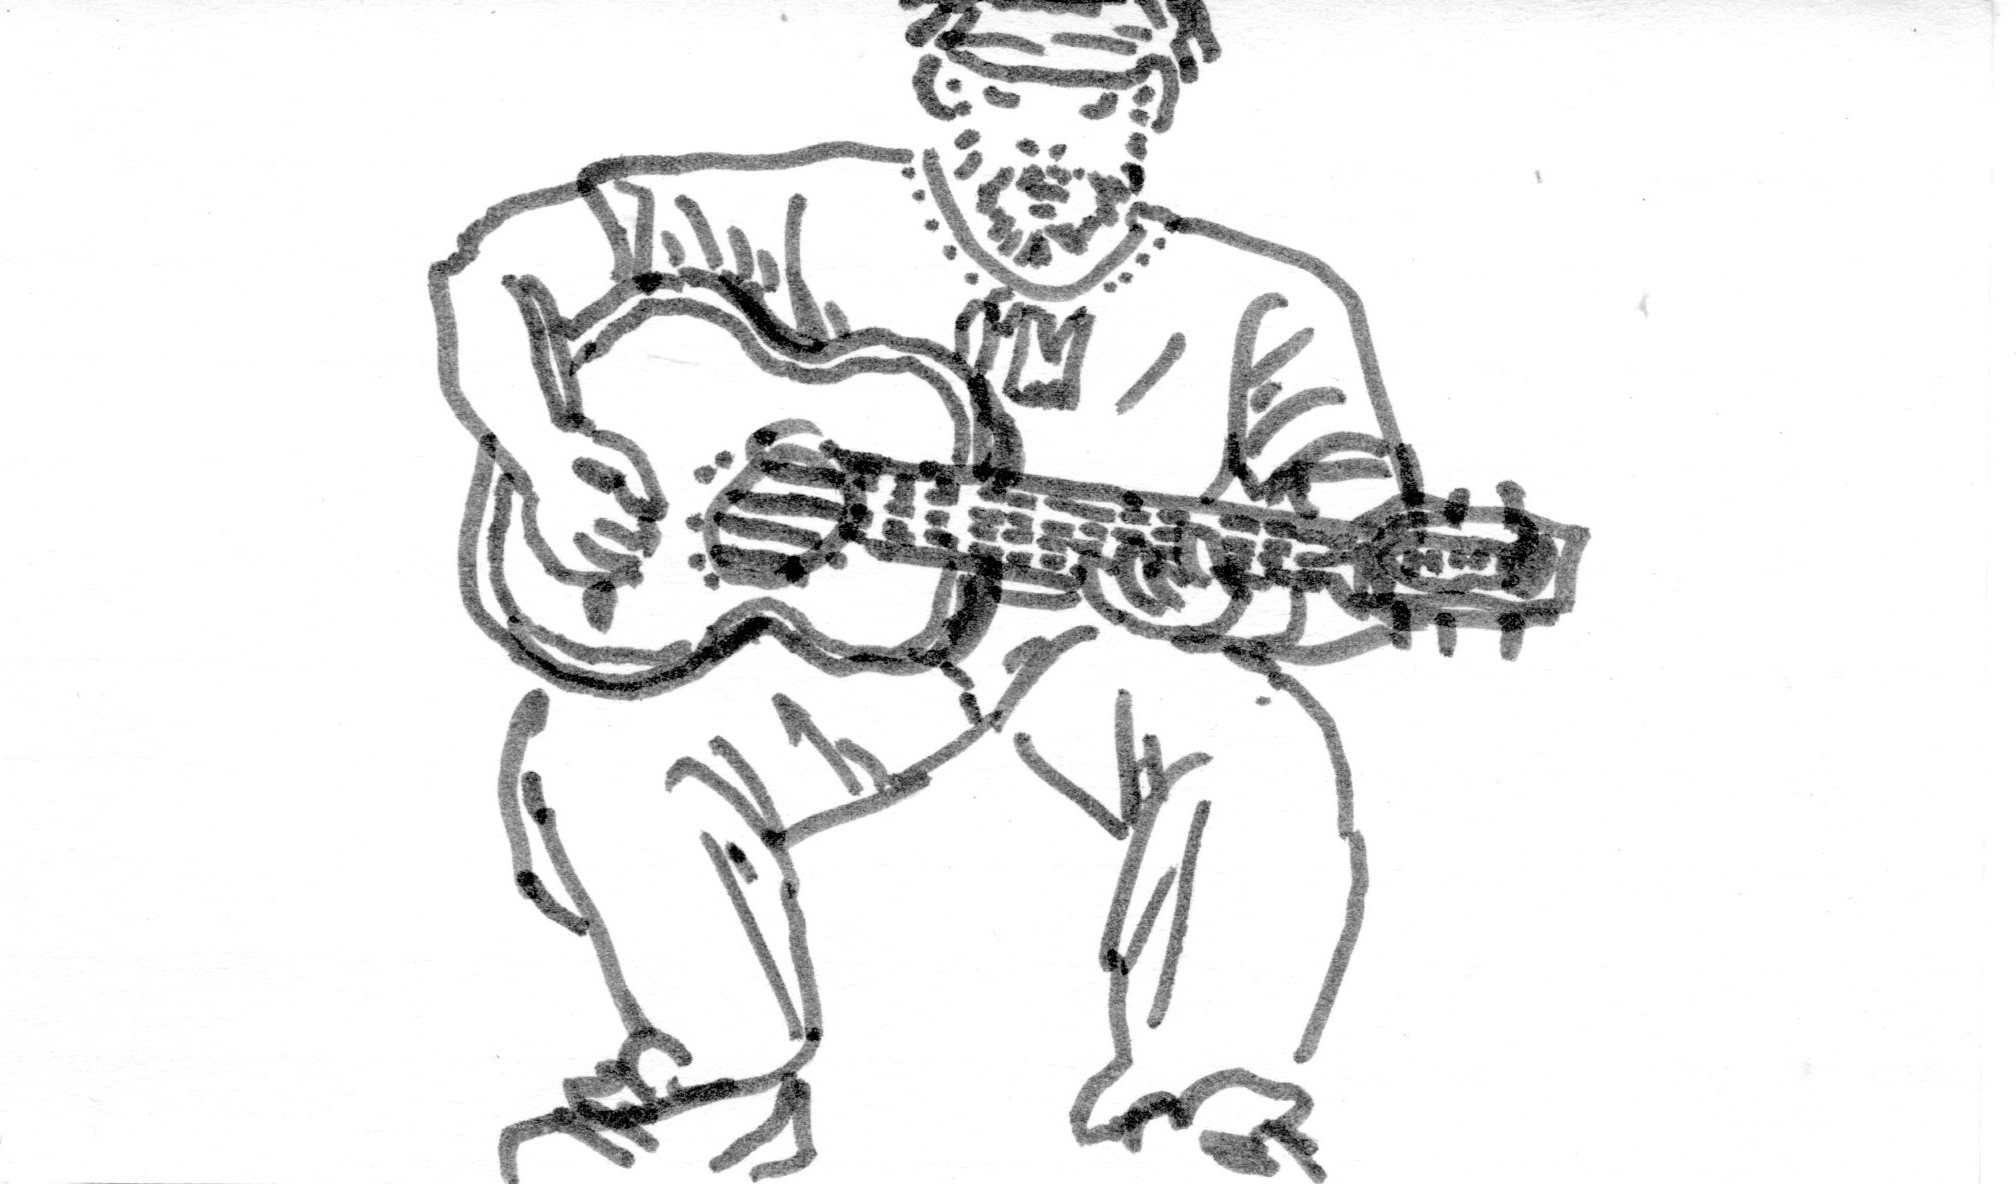 folk music musician acoustic guitar beard sitting marker pen